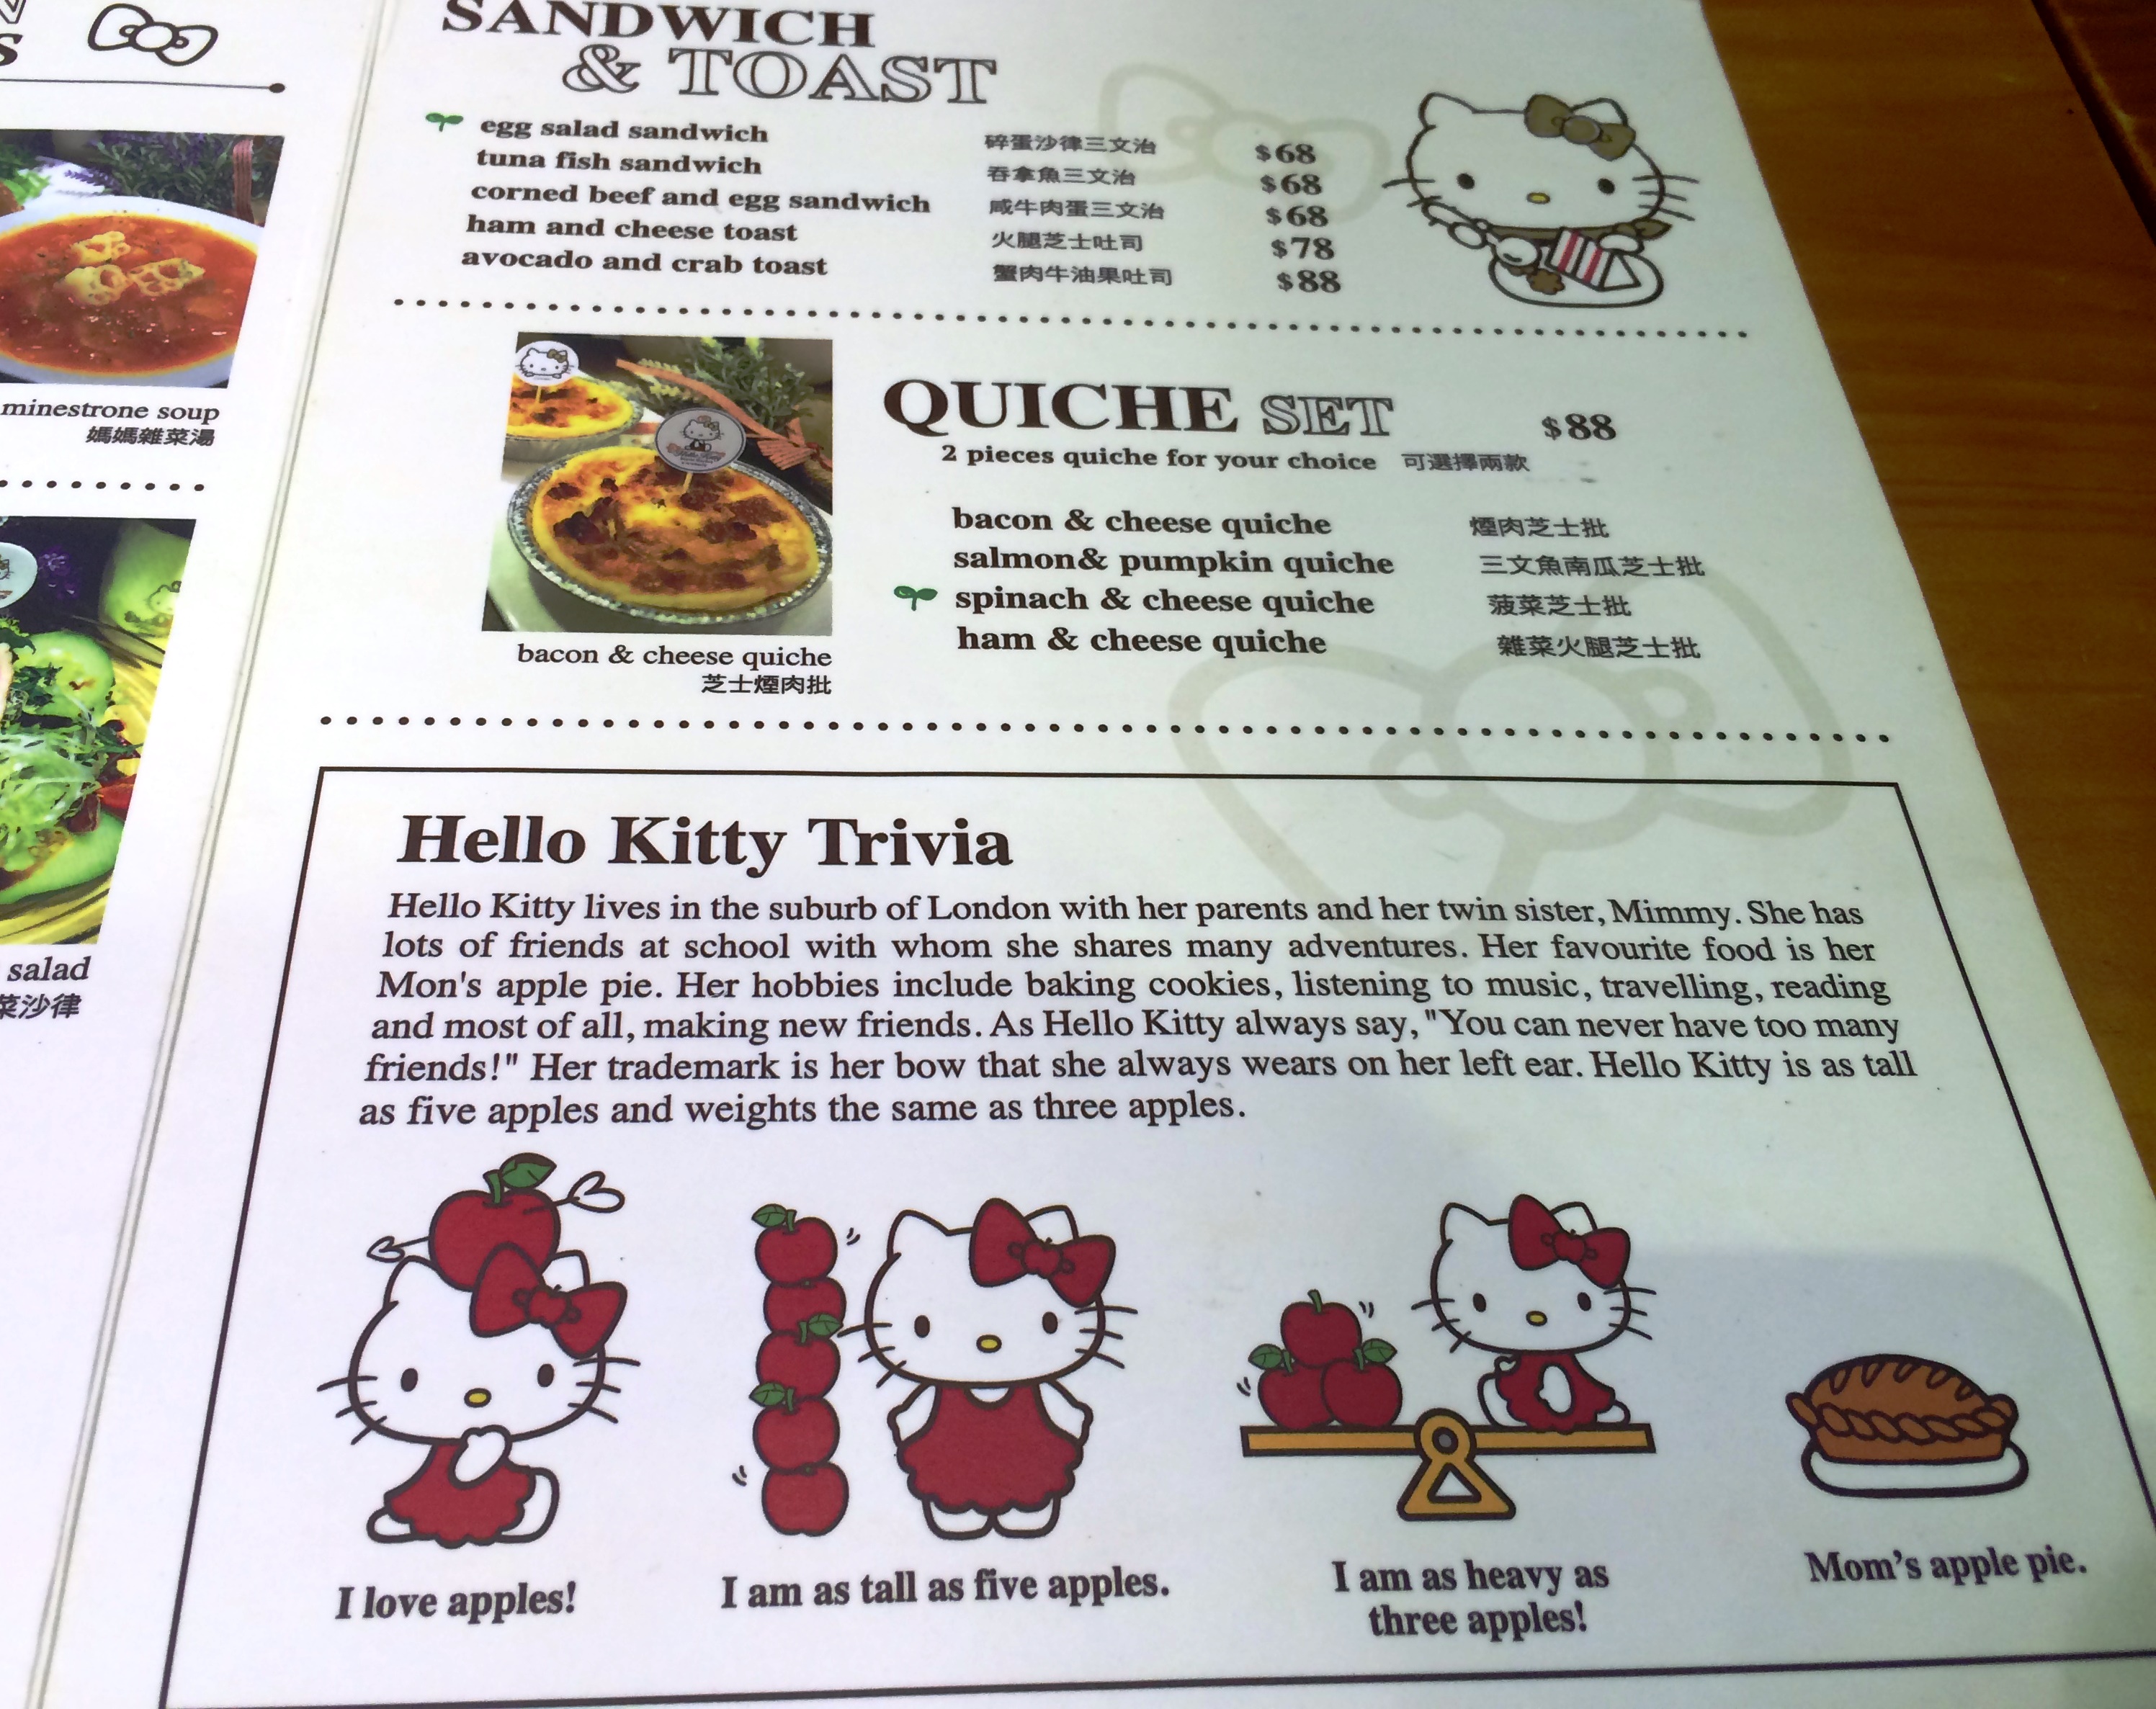 menu hello kitty cafe